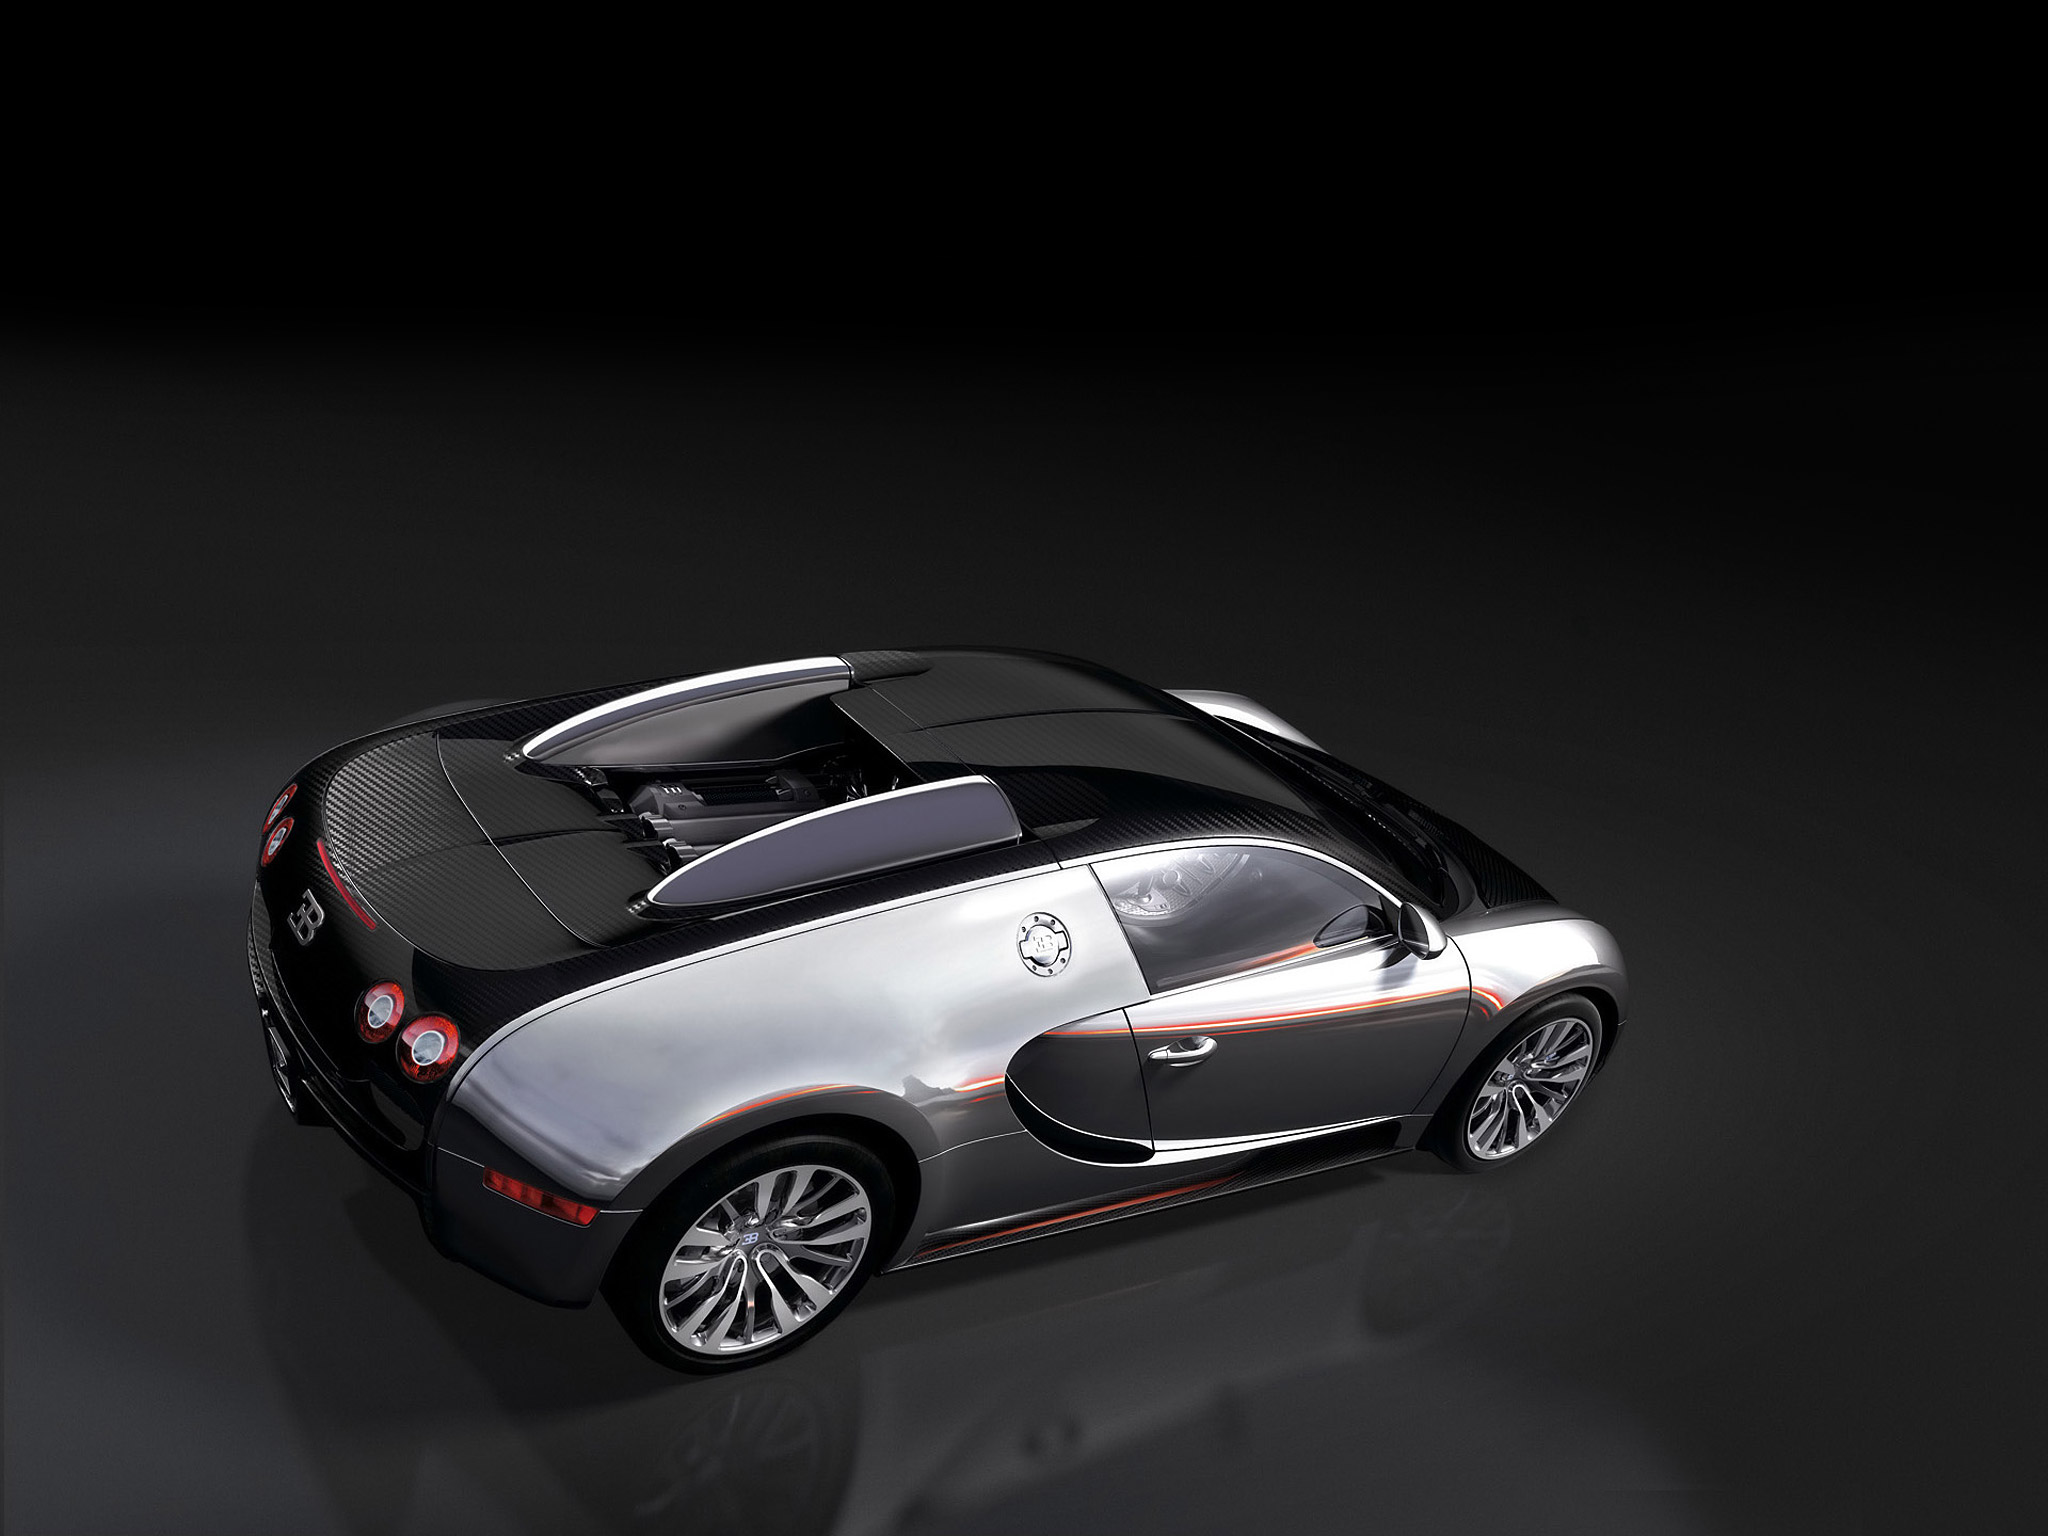 497420 Заставки и Обои Bugatti Veyron 16 4 Пур Санг на телефон. Скачать  картинки бесплатно